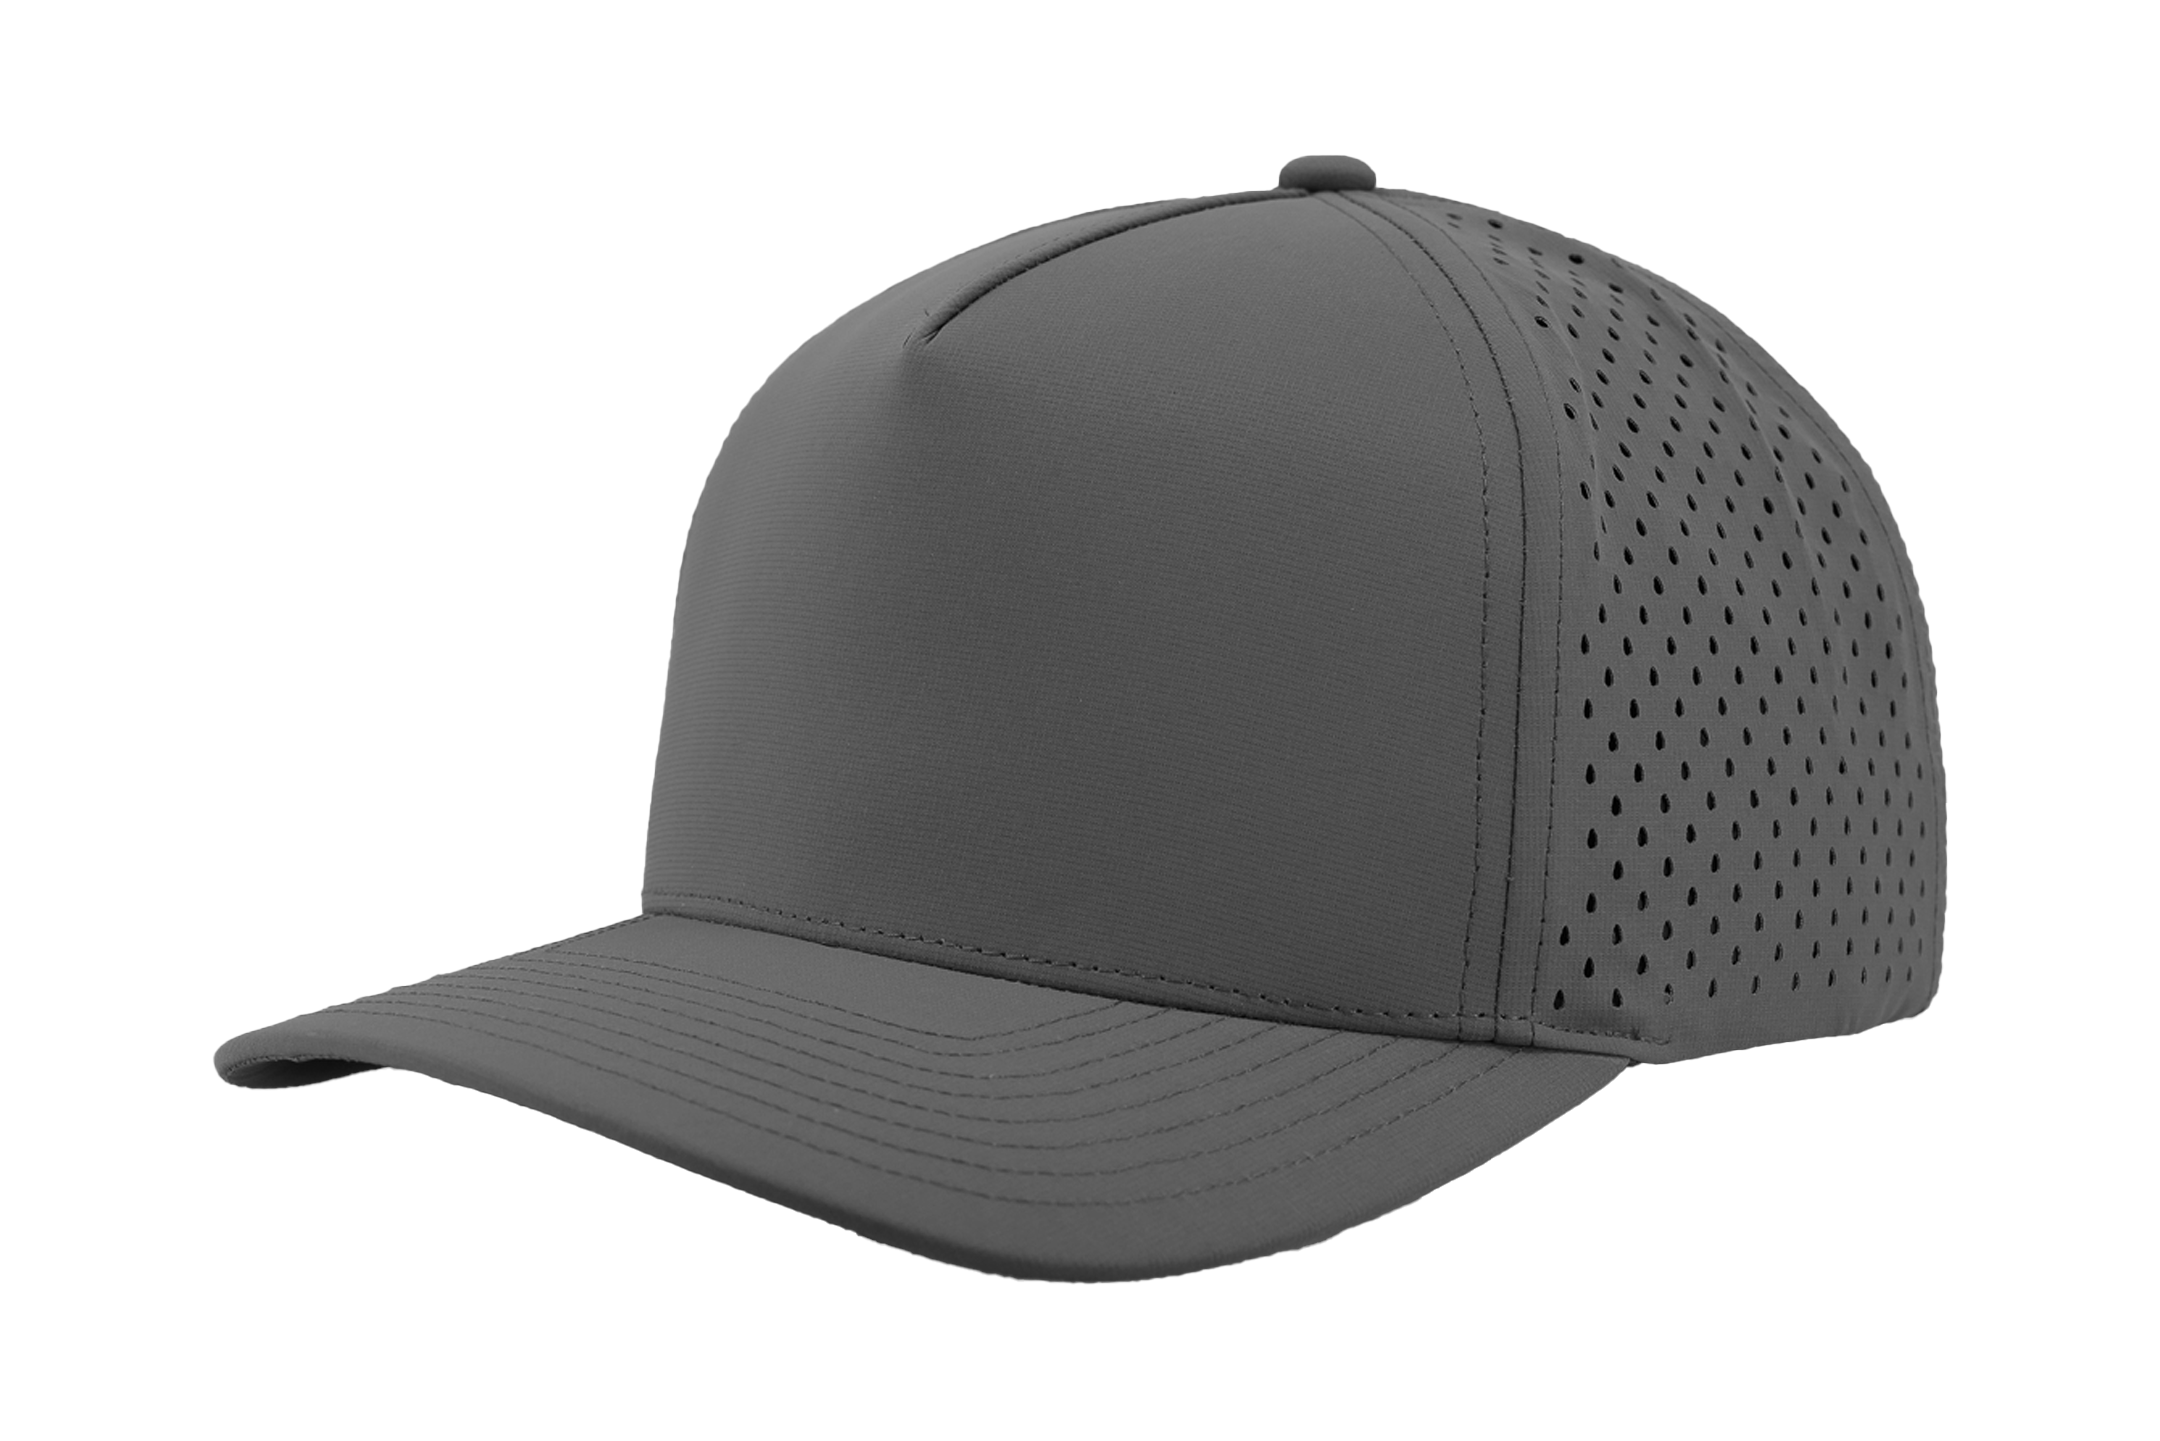 Custom Hat grey blackhawk front side view performance snapback